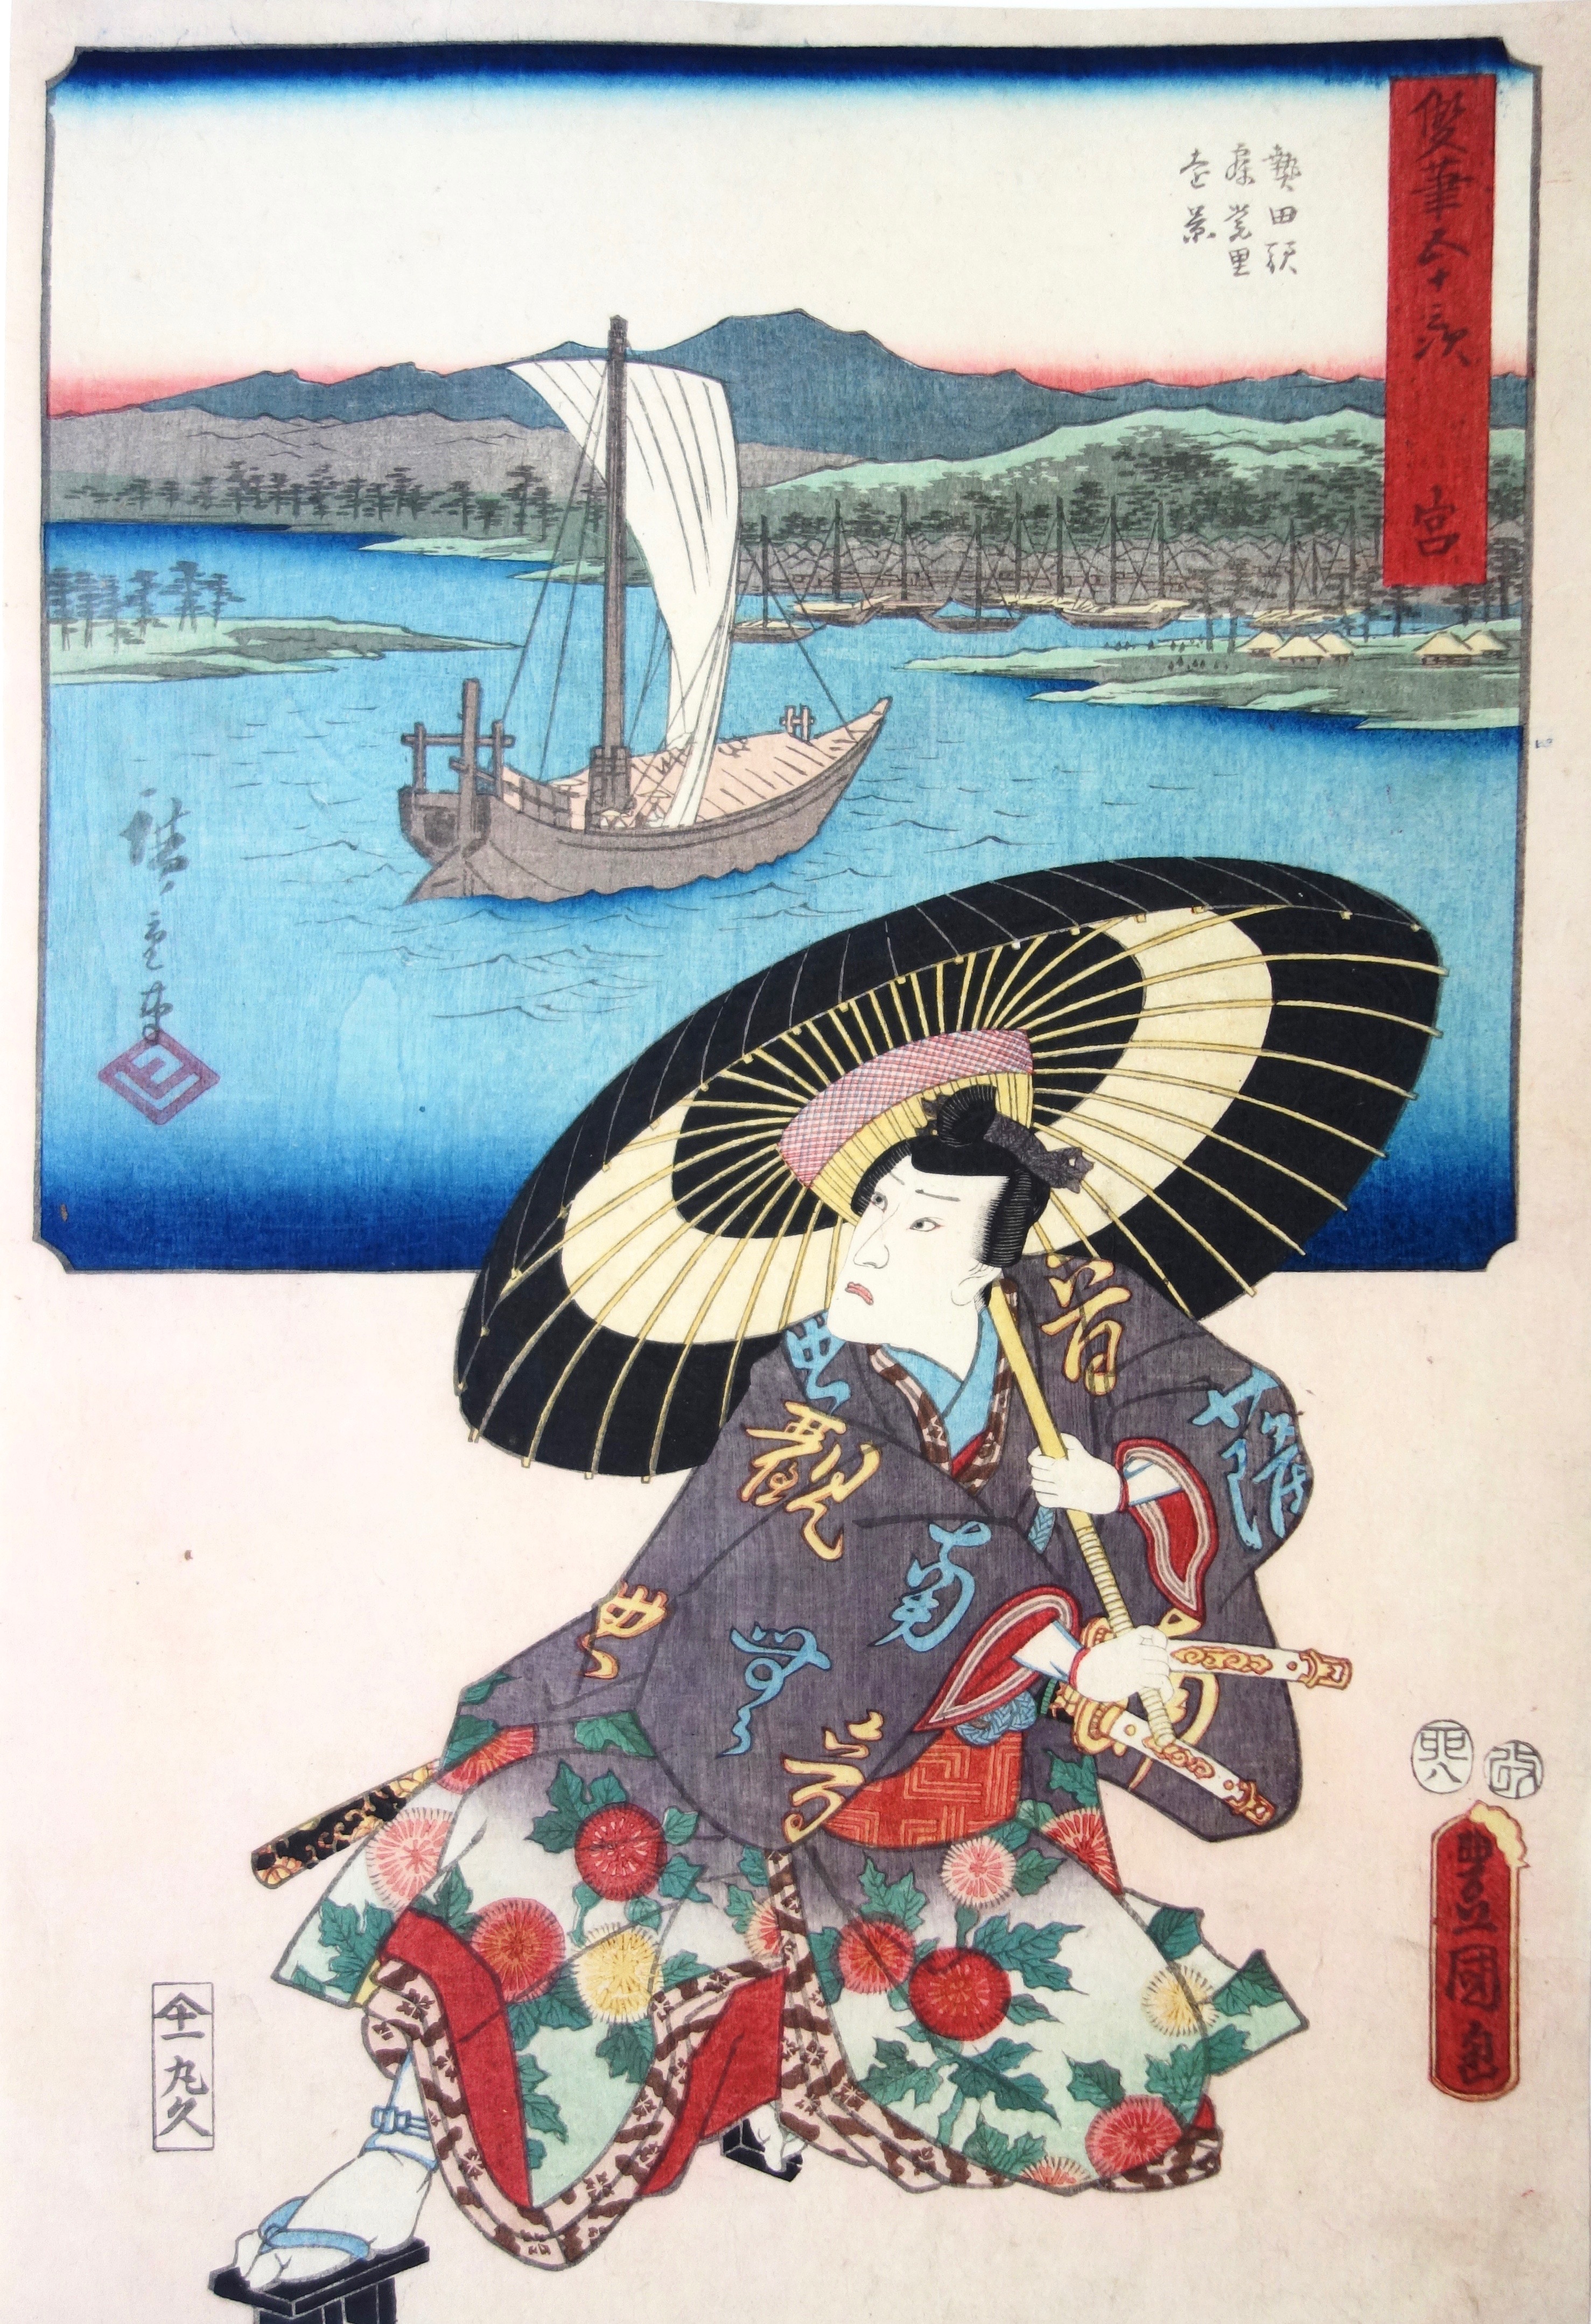 KUNISADA Utagawa, called TOYOKUNI III and HIROSHIGE Ando